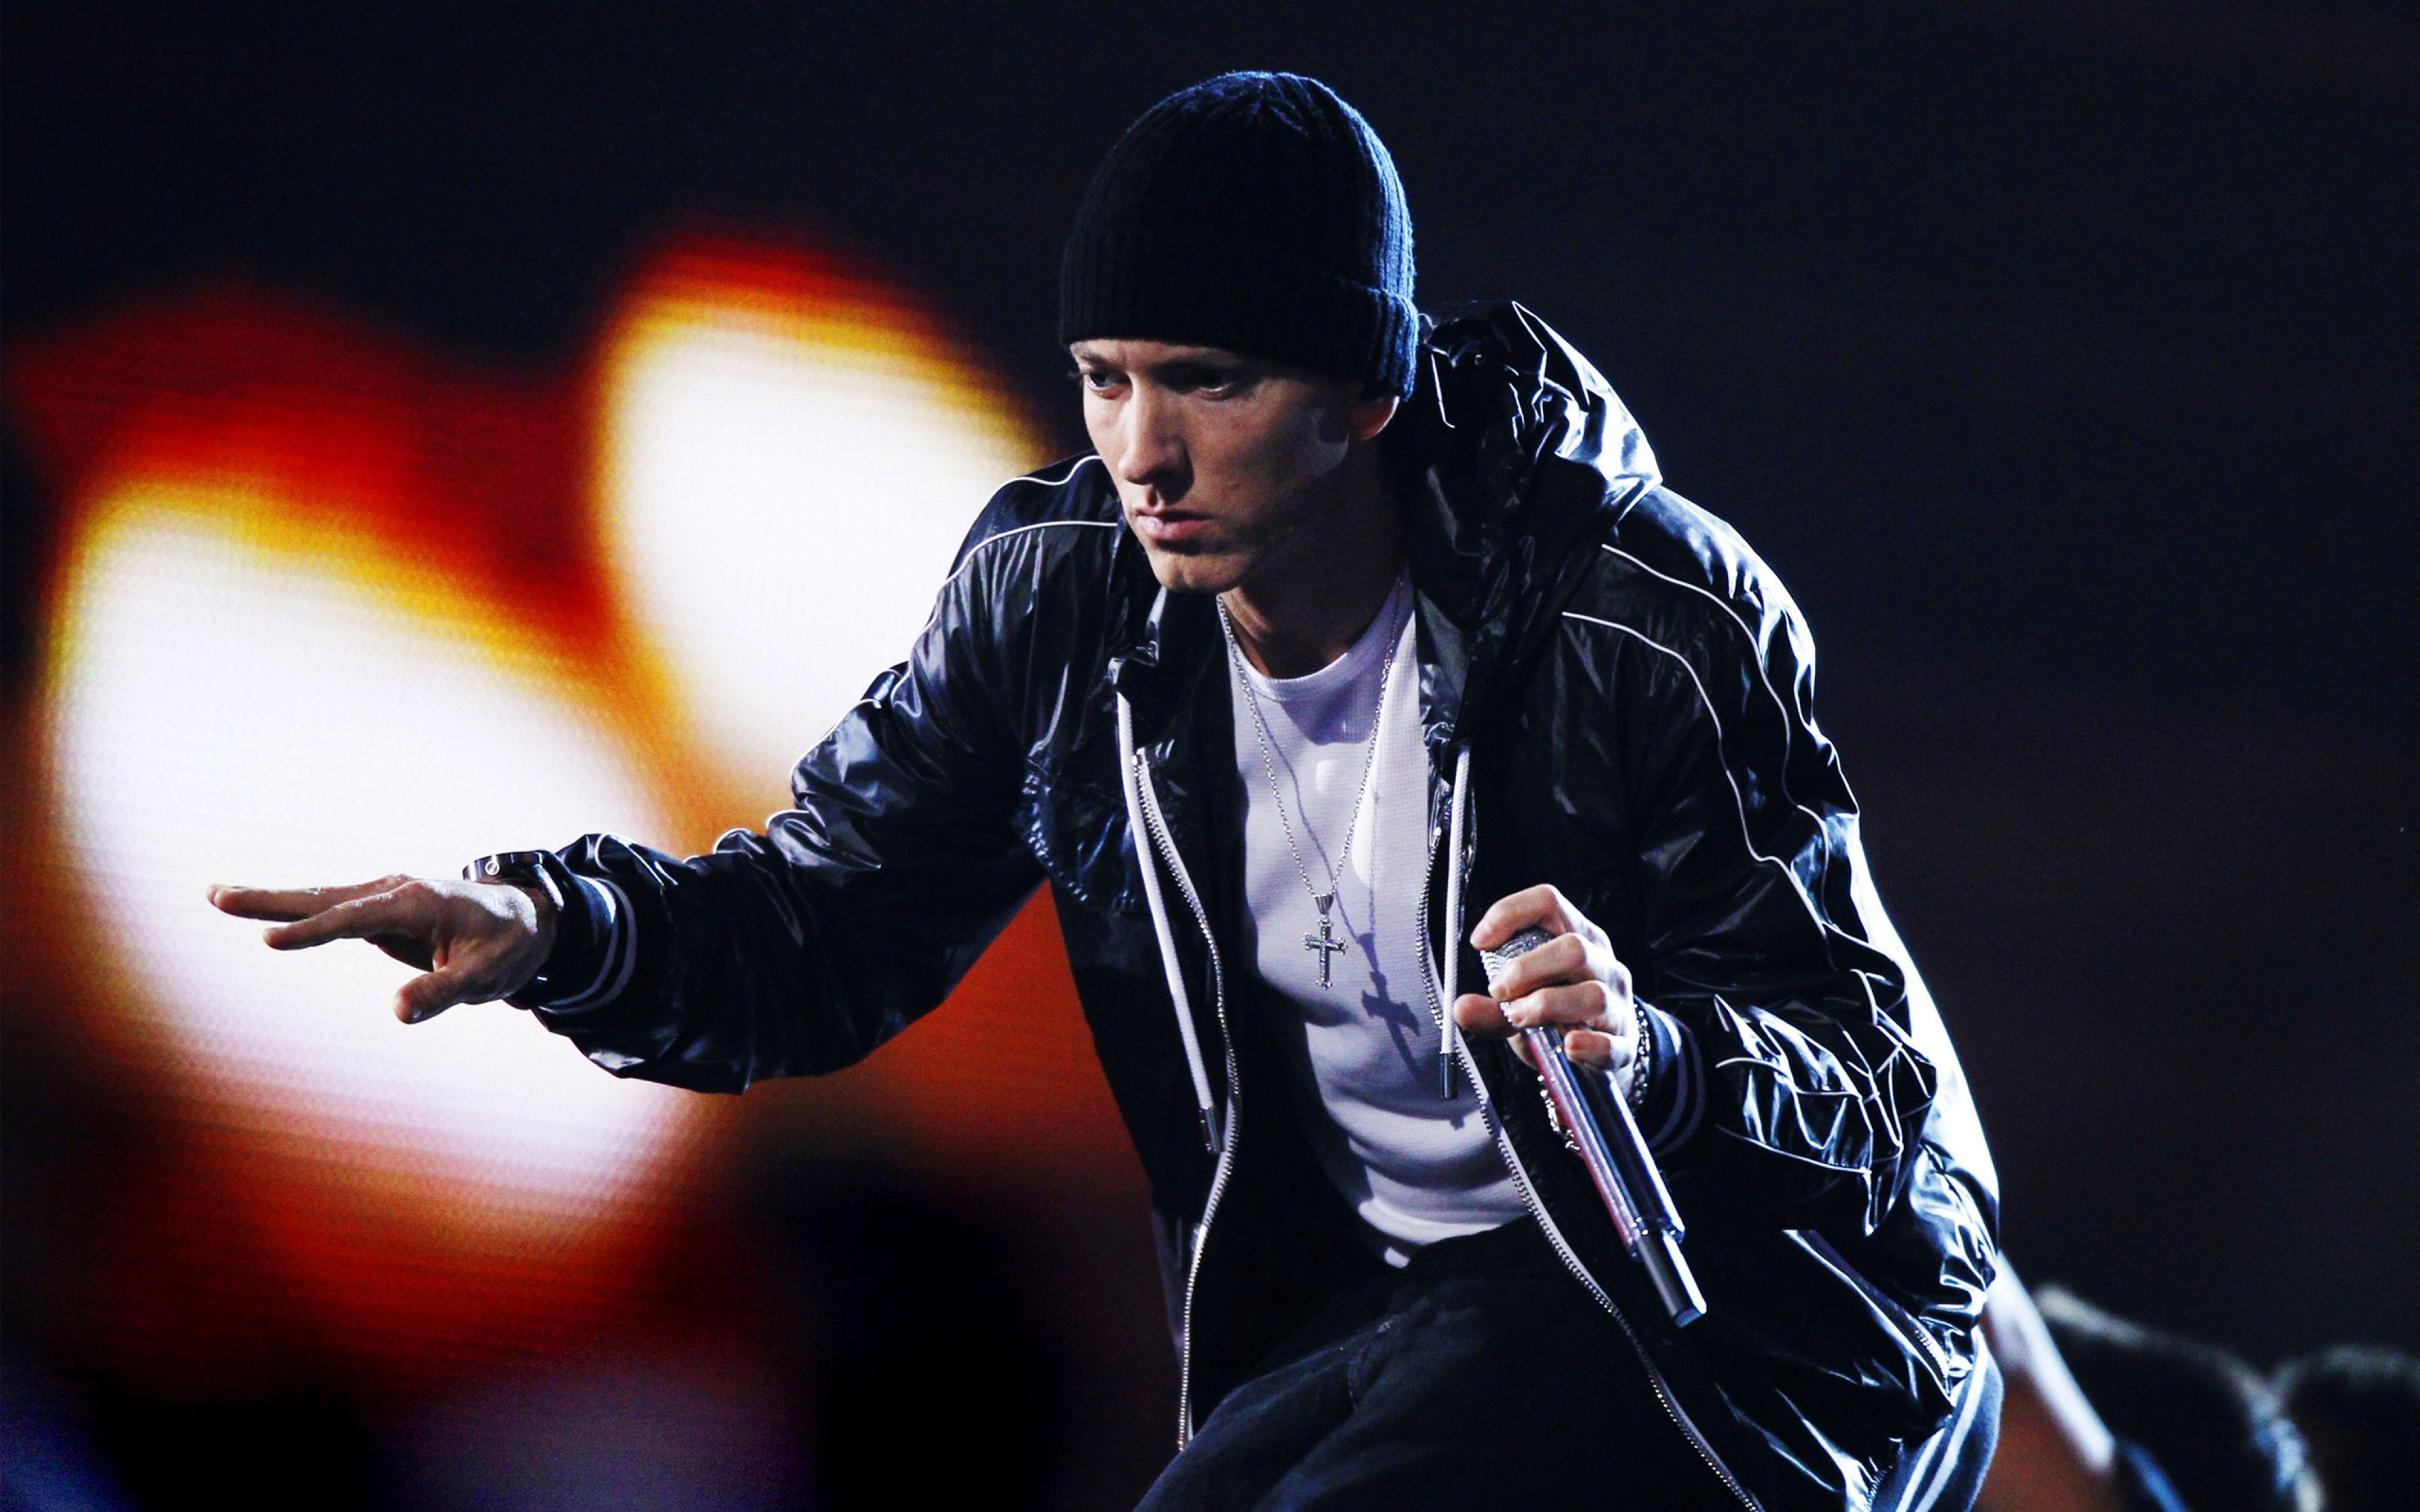 Eminem Wallpaper HD. Wallpaper, Background, Image, Art Photo